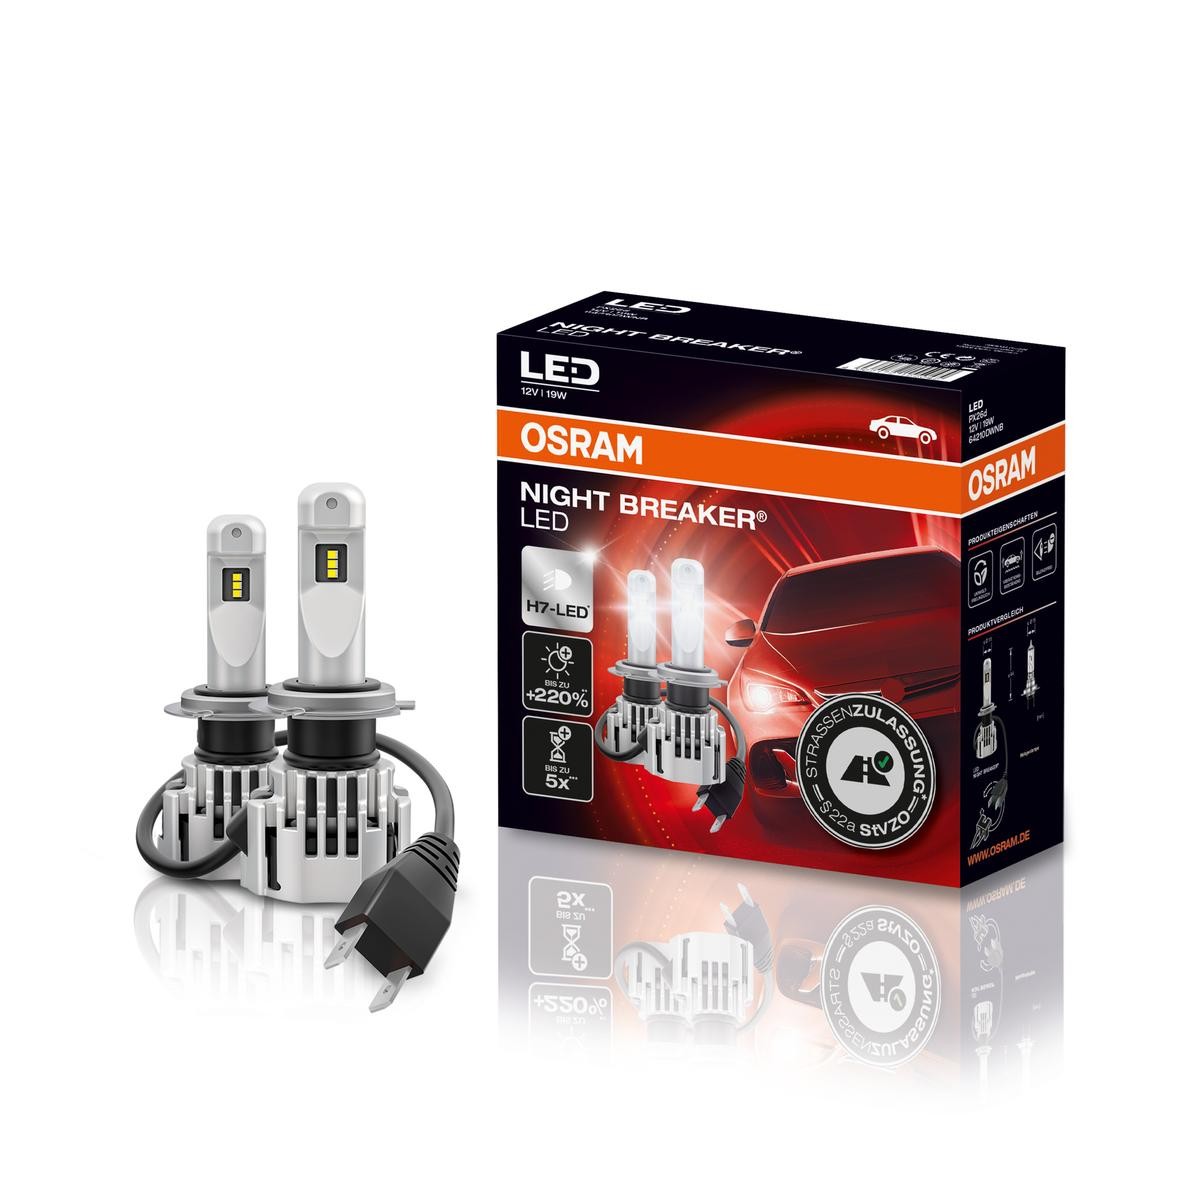 2 x W5W Glühbirnen – 13 rote LEDs – SMD5050 LED – 13 LEDs – T10